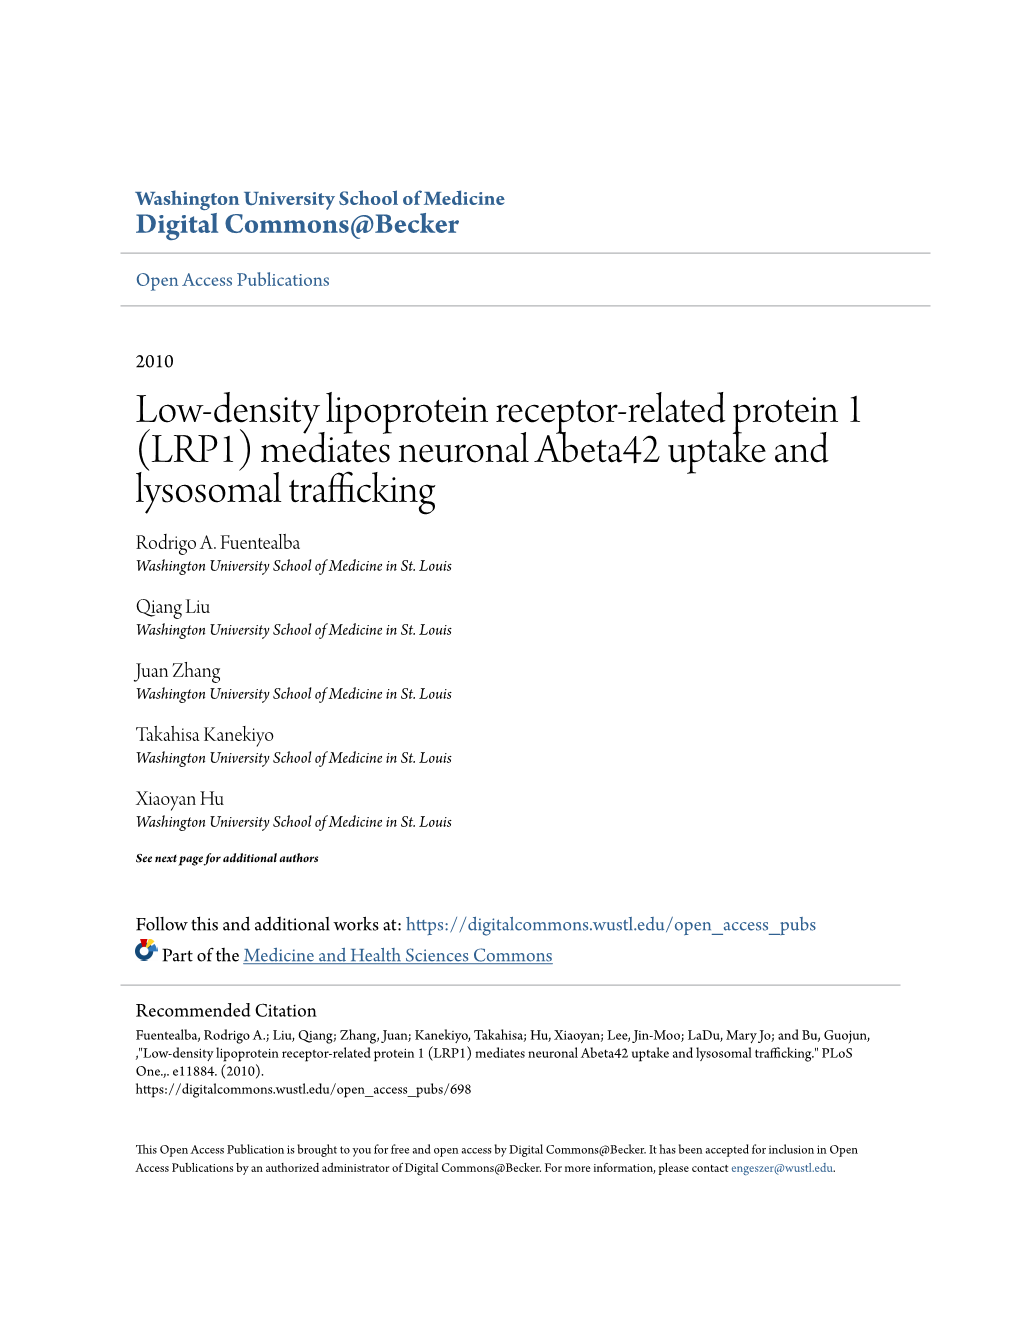 Mediates Neuronal Abeta42 Uptake and Lysosomal Trafficking Rodrigo A